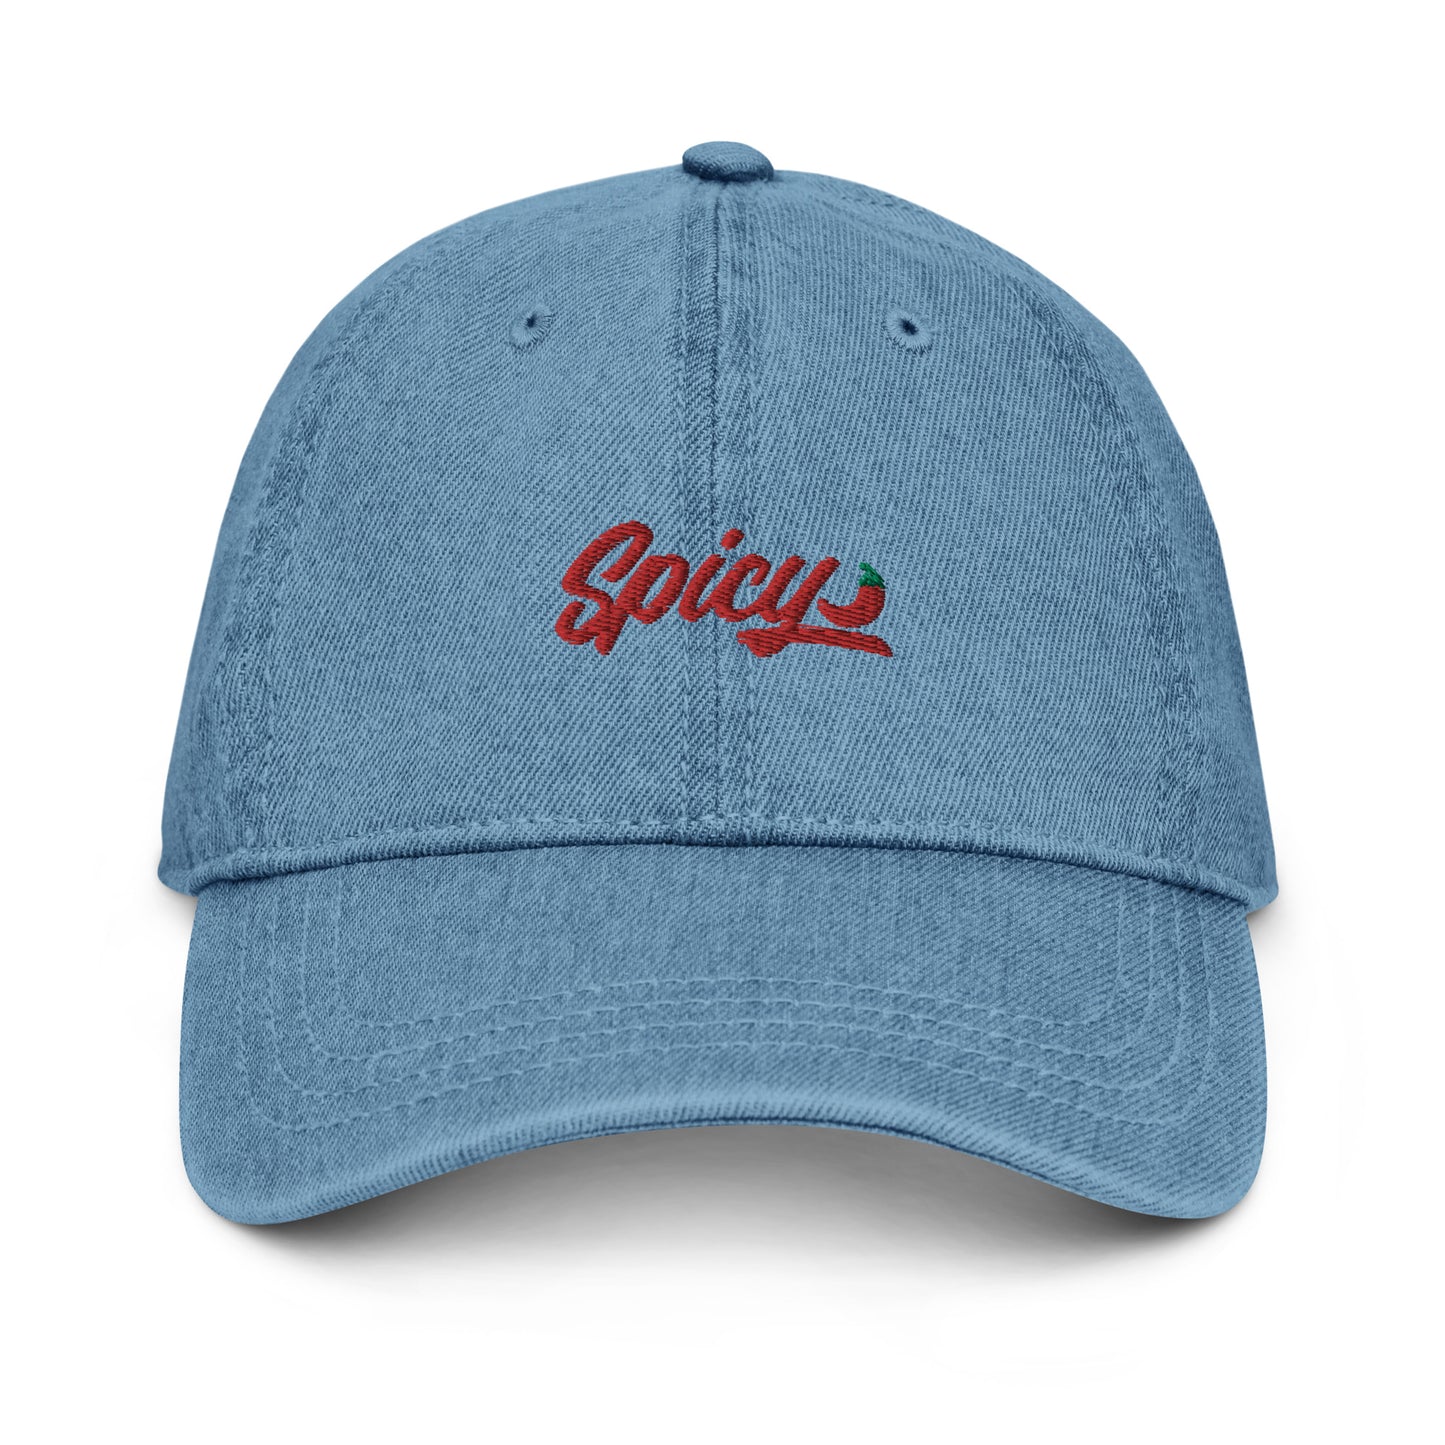 Spicy baseball cap